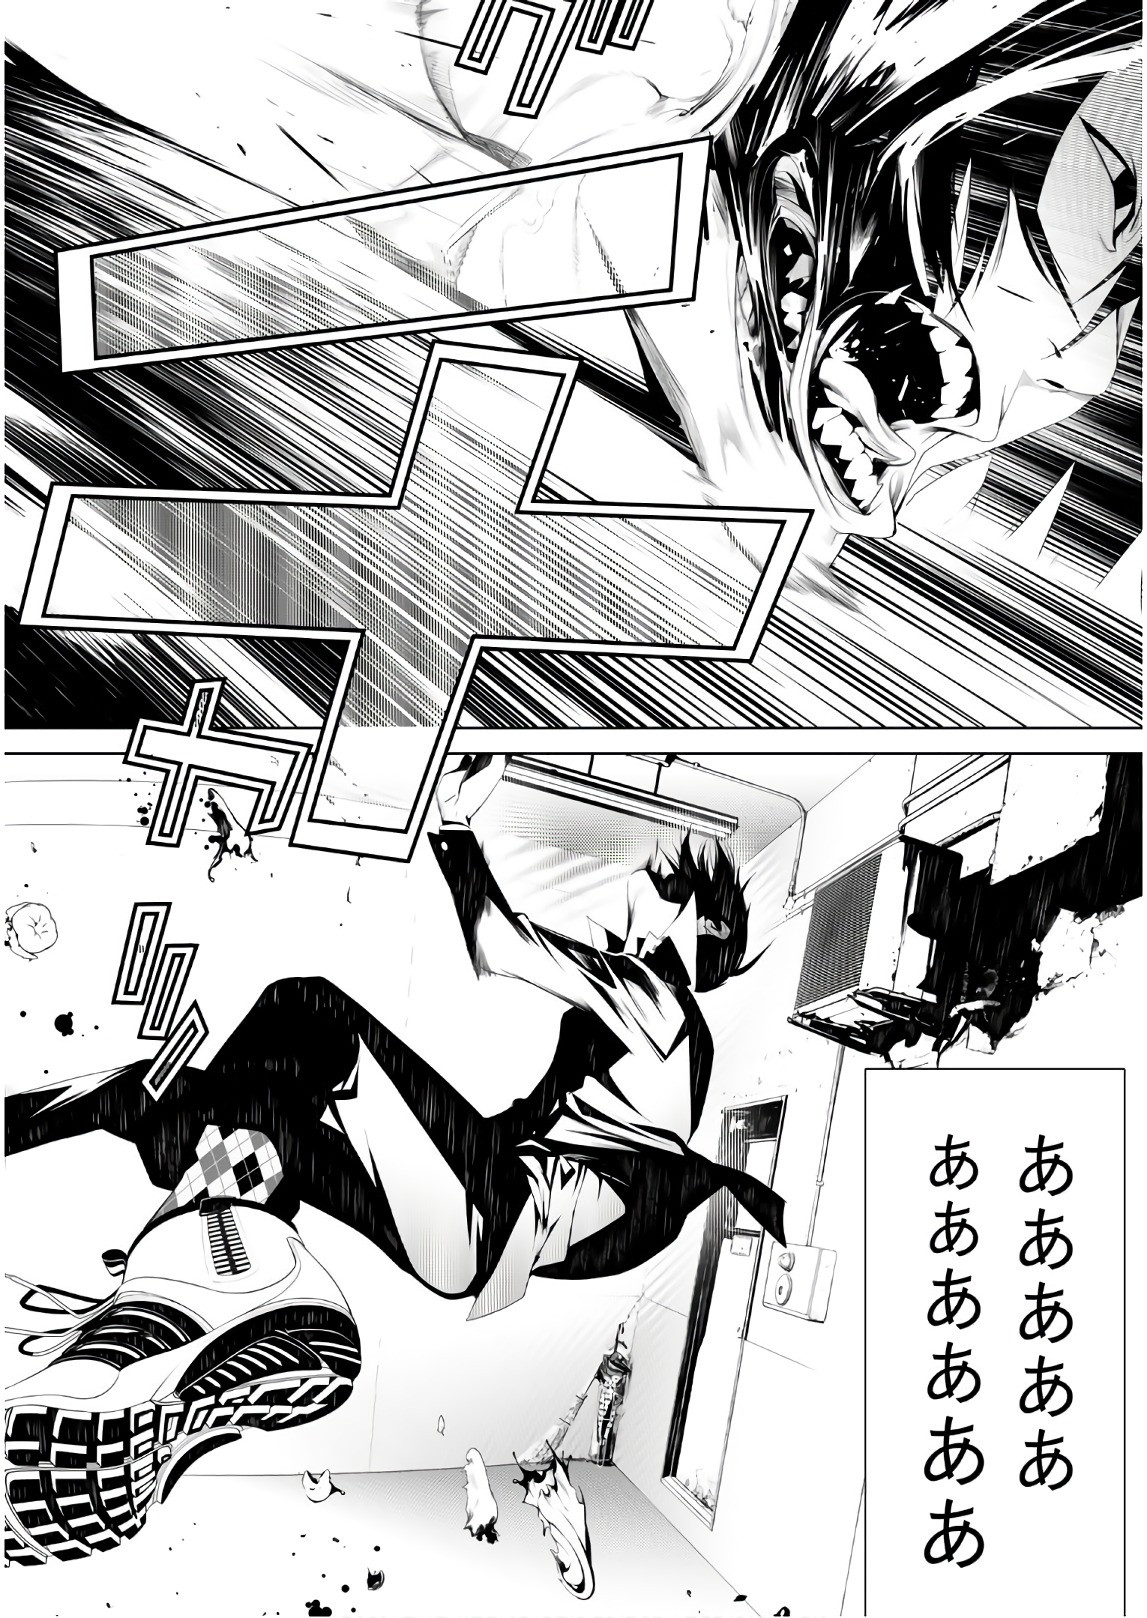 Bakemonogatari - Chapter 39 - Page 2